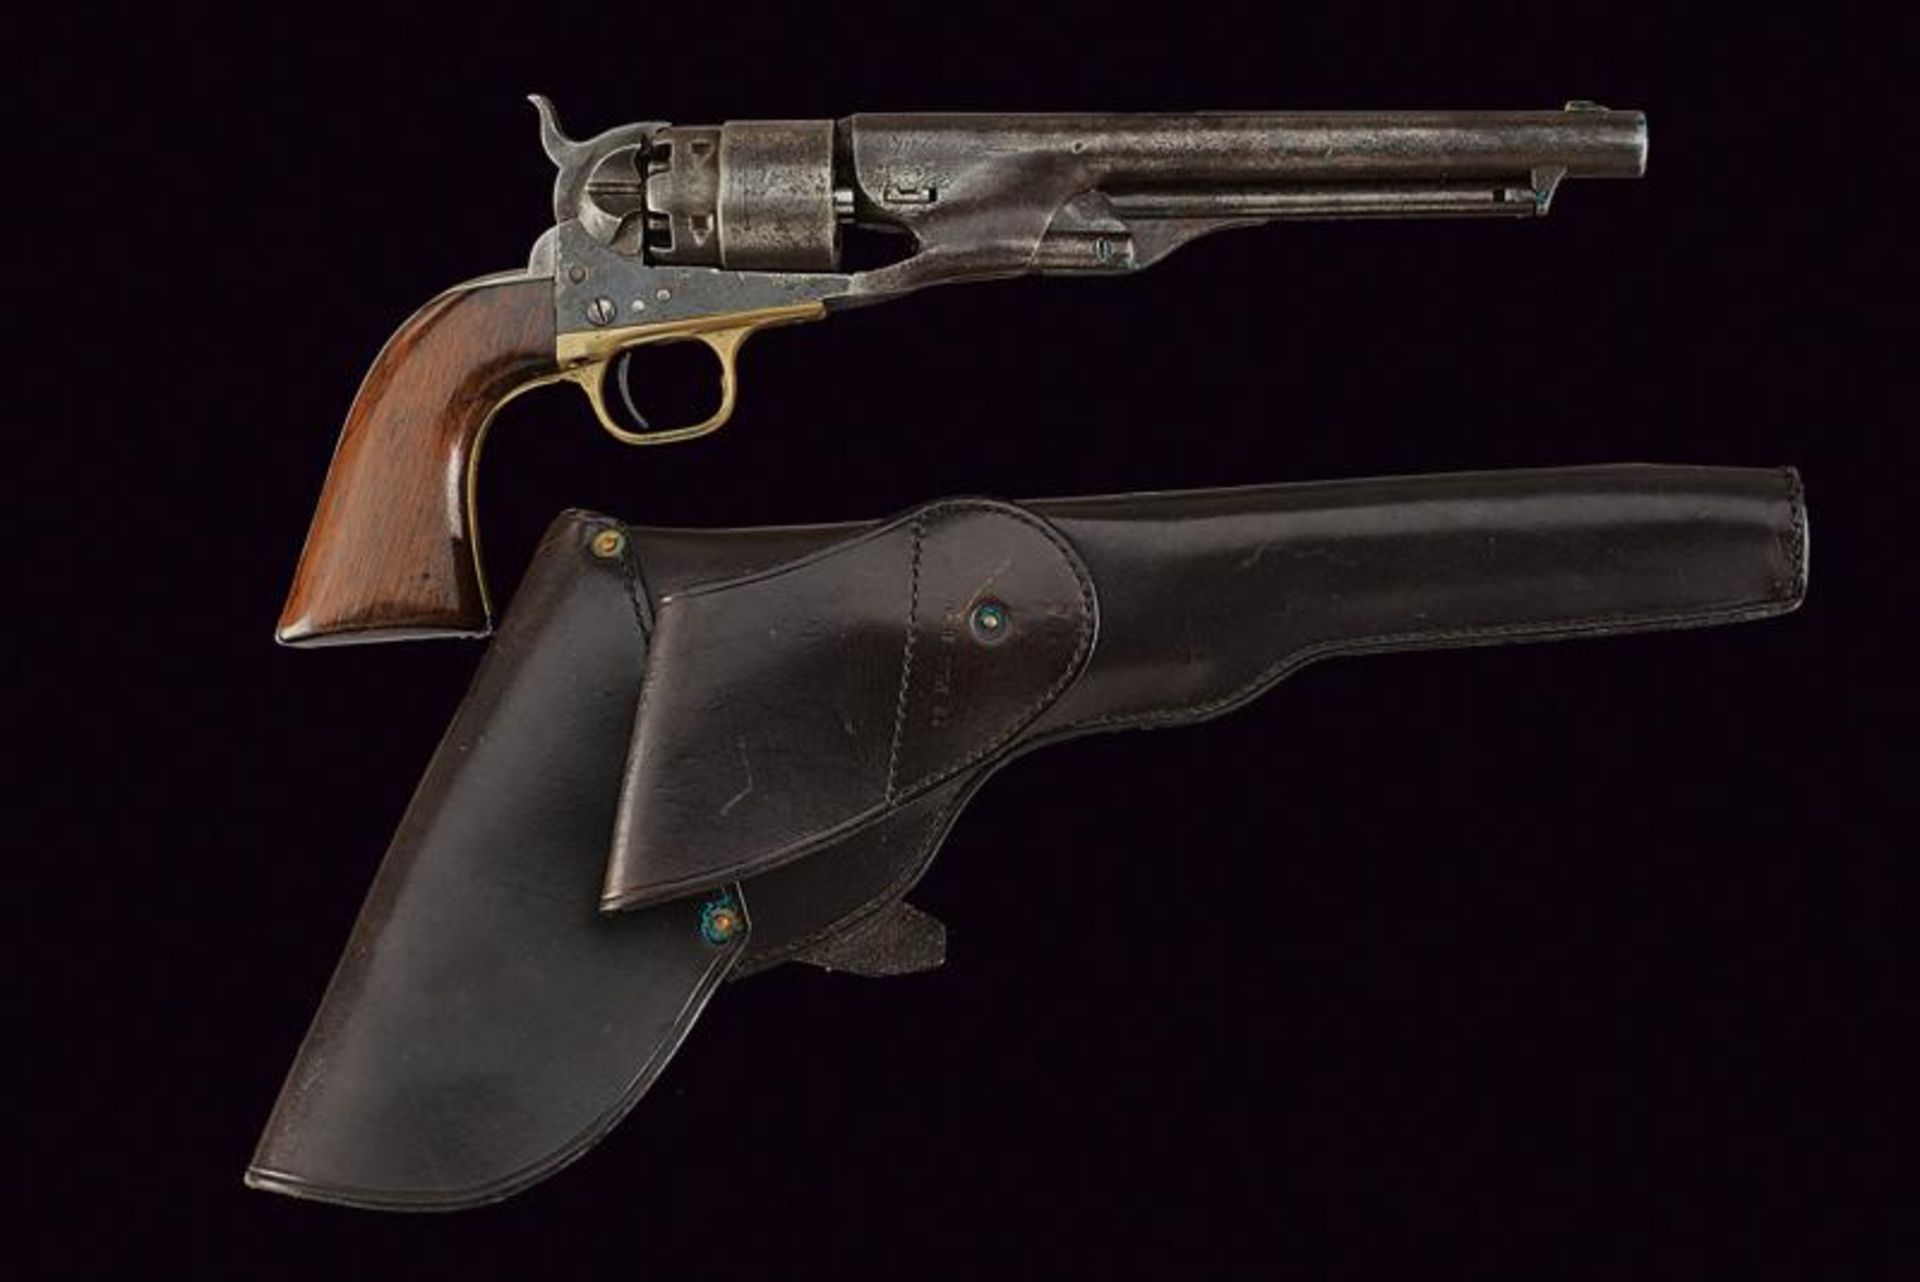 A 1860 Colt Model Army Revolver